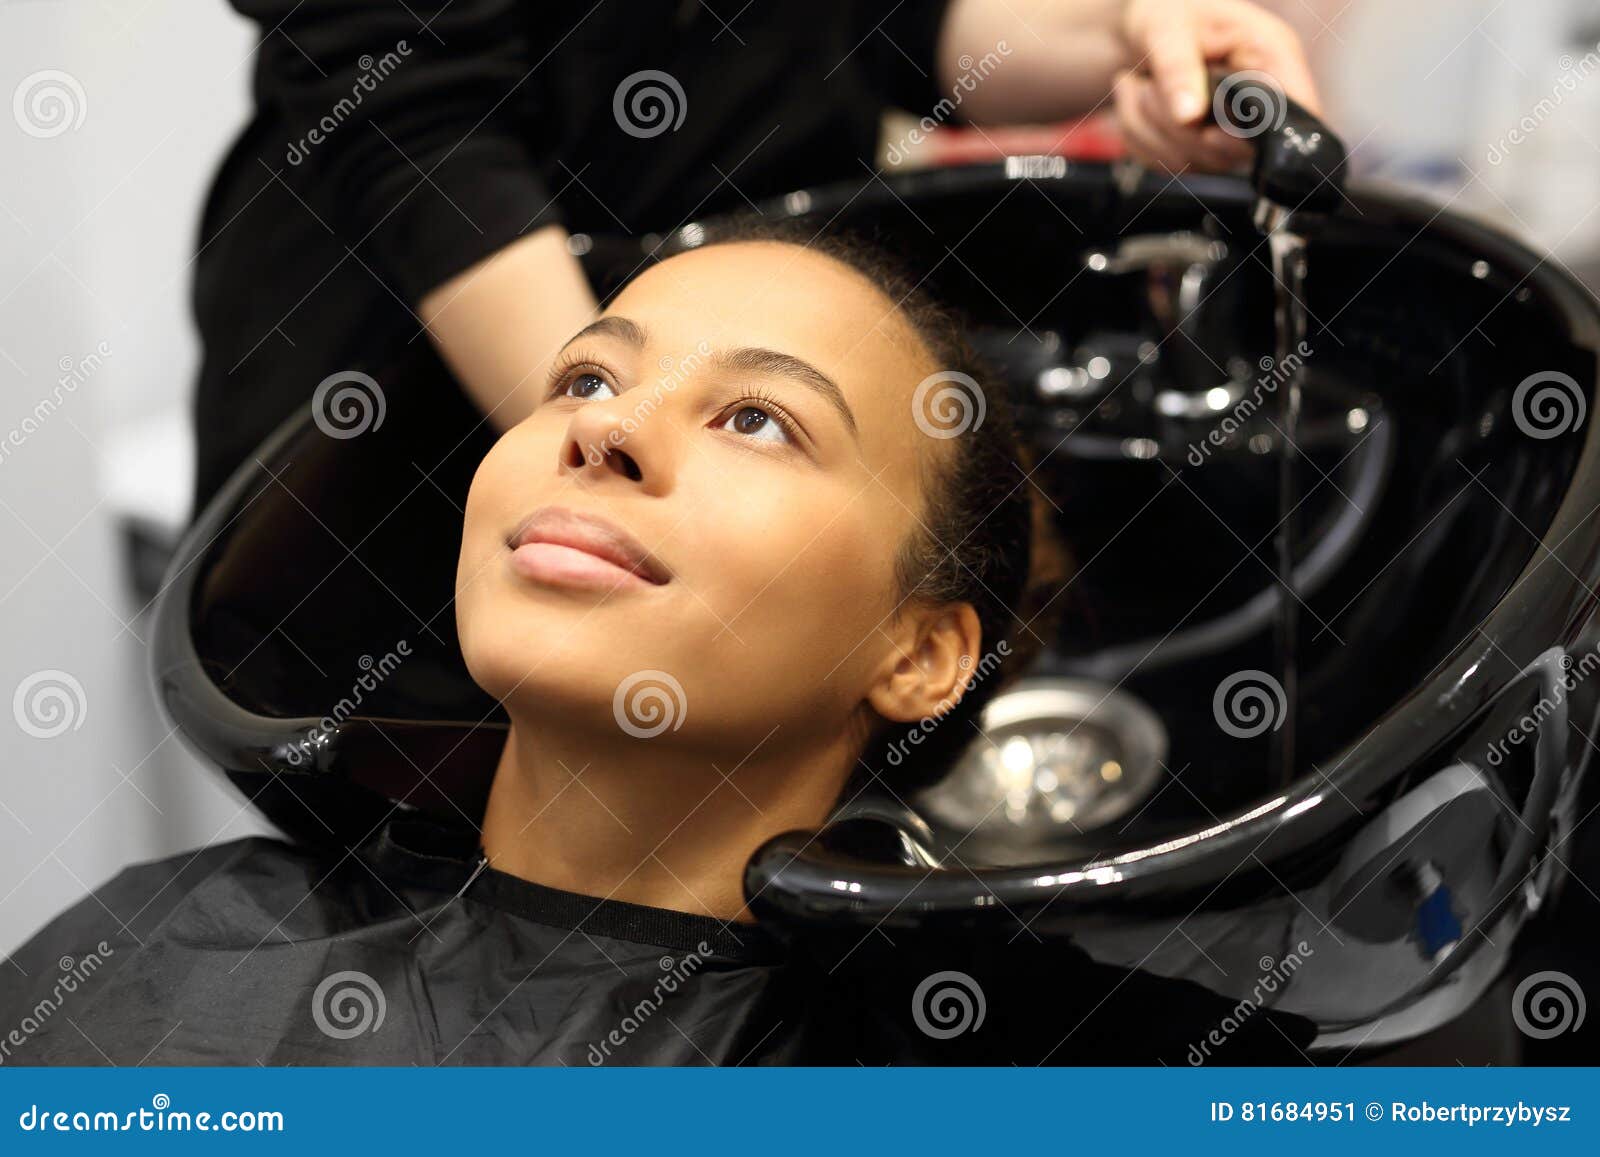 washing head in a hair salon